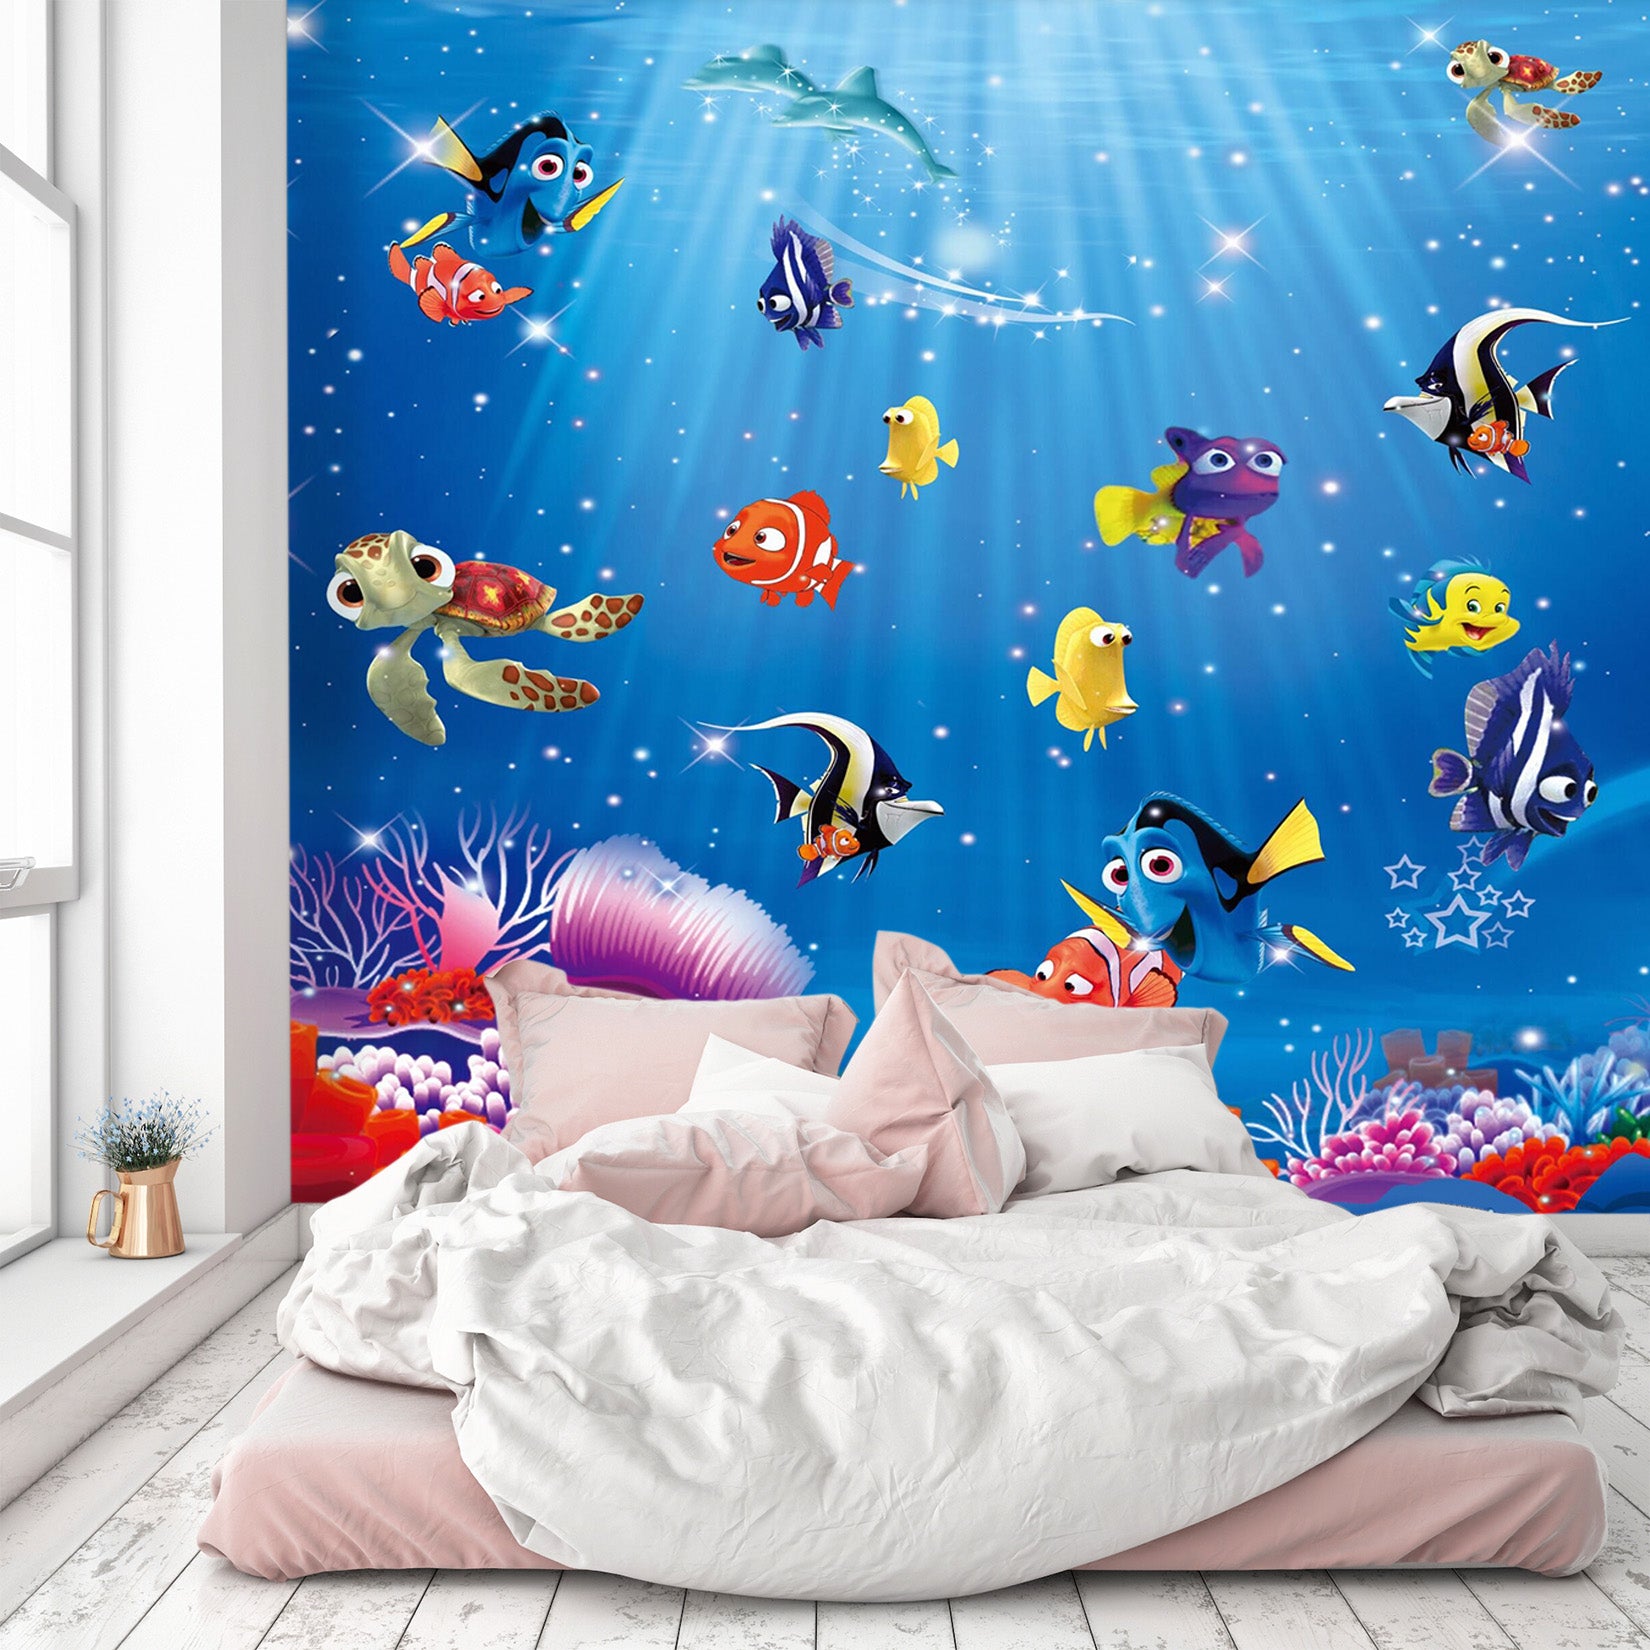 3D The Underwater World 106 Wall Murals